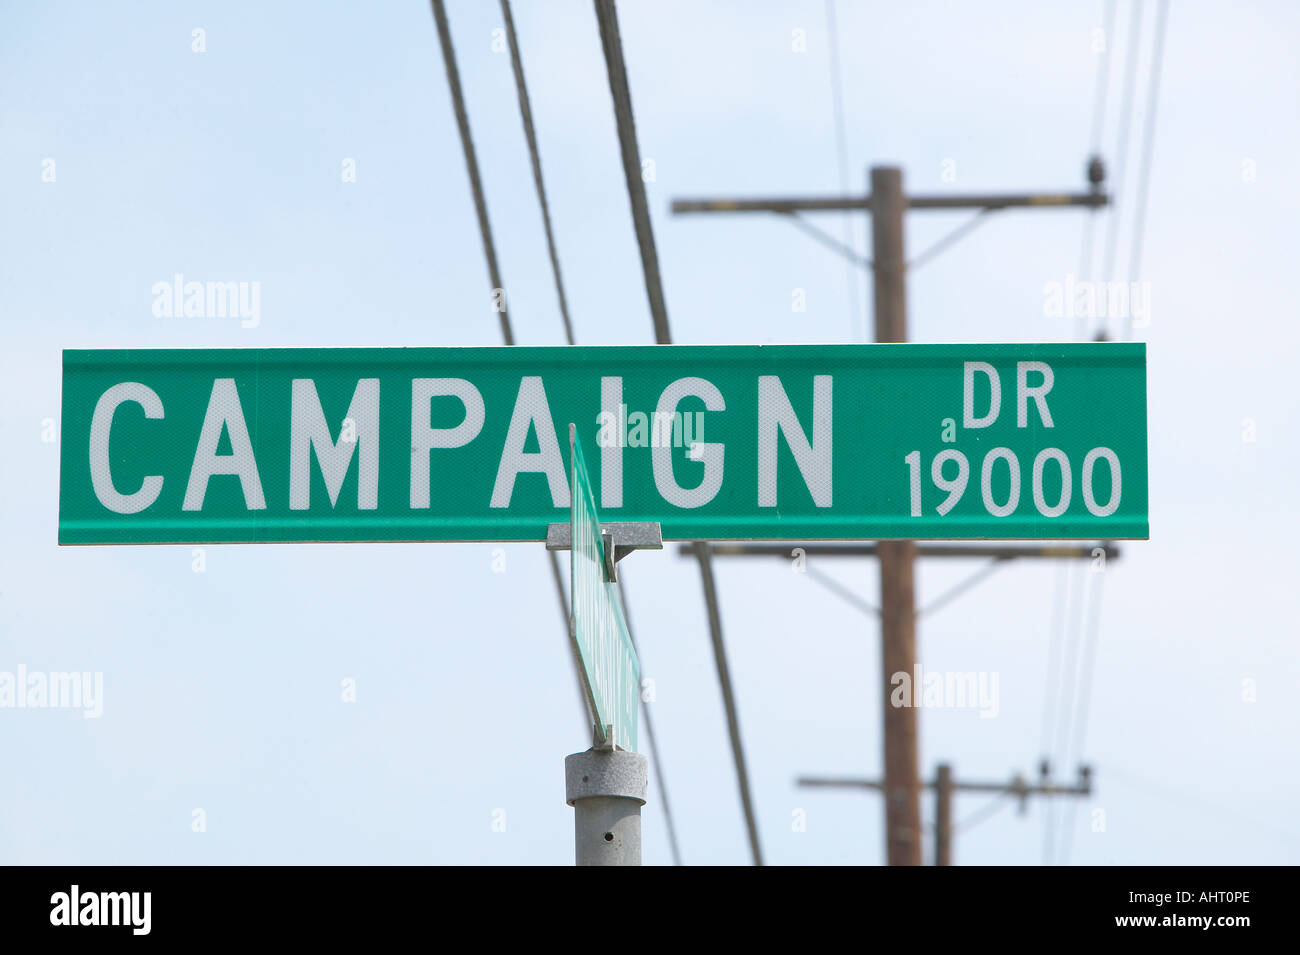 Campaign Drive street sign CSU Dominguez Hills Los Angeles CA Stock Photo